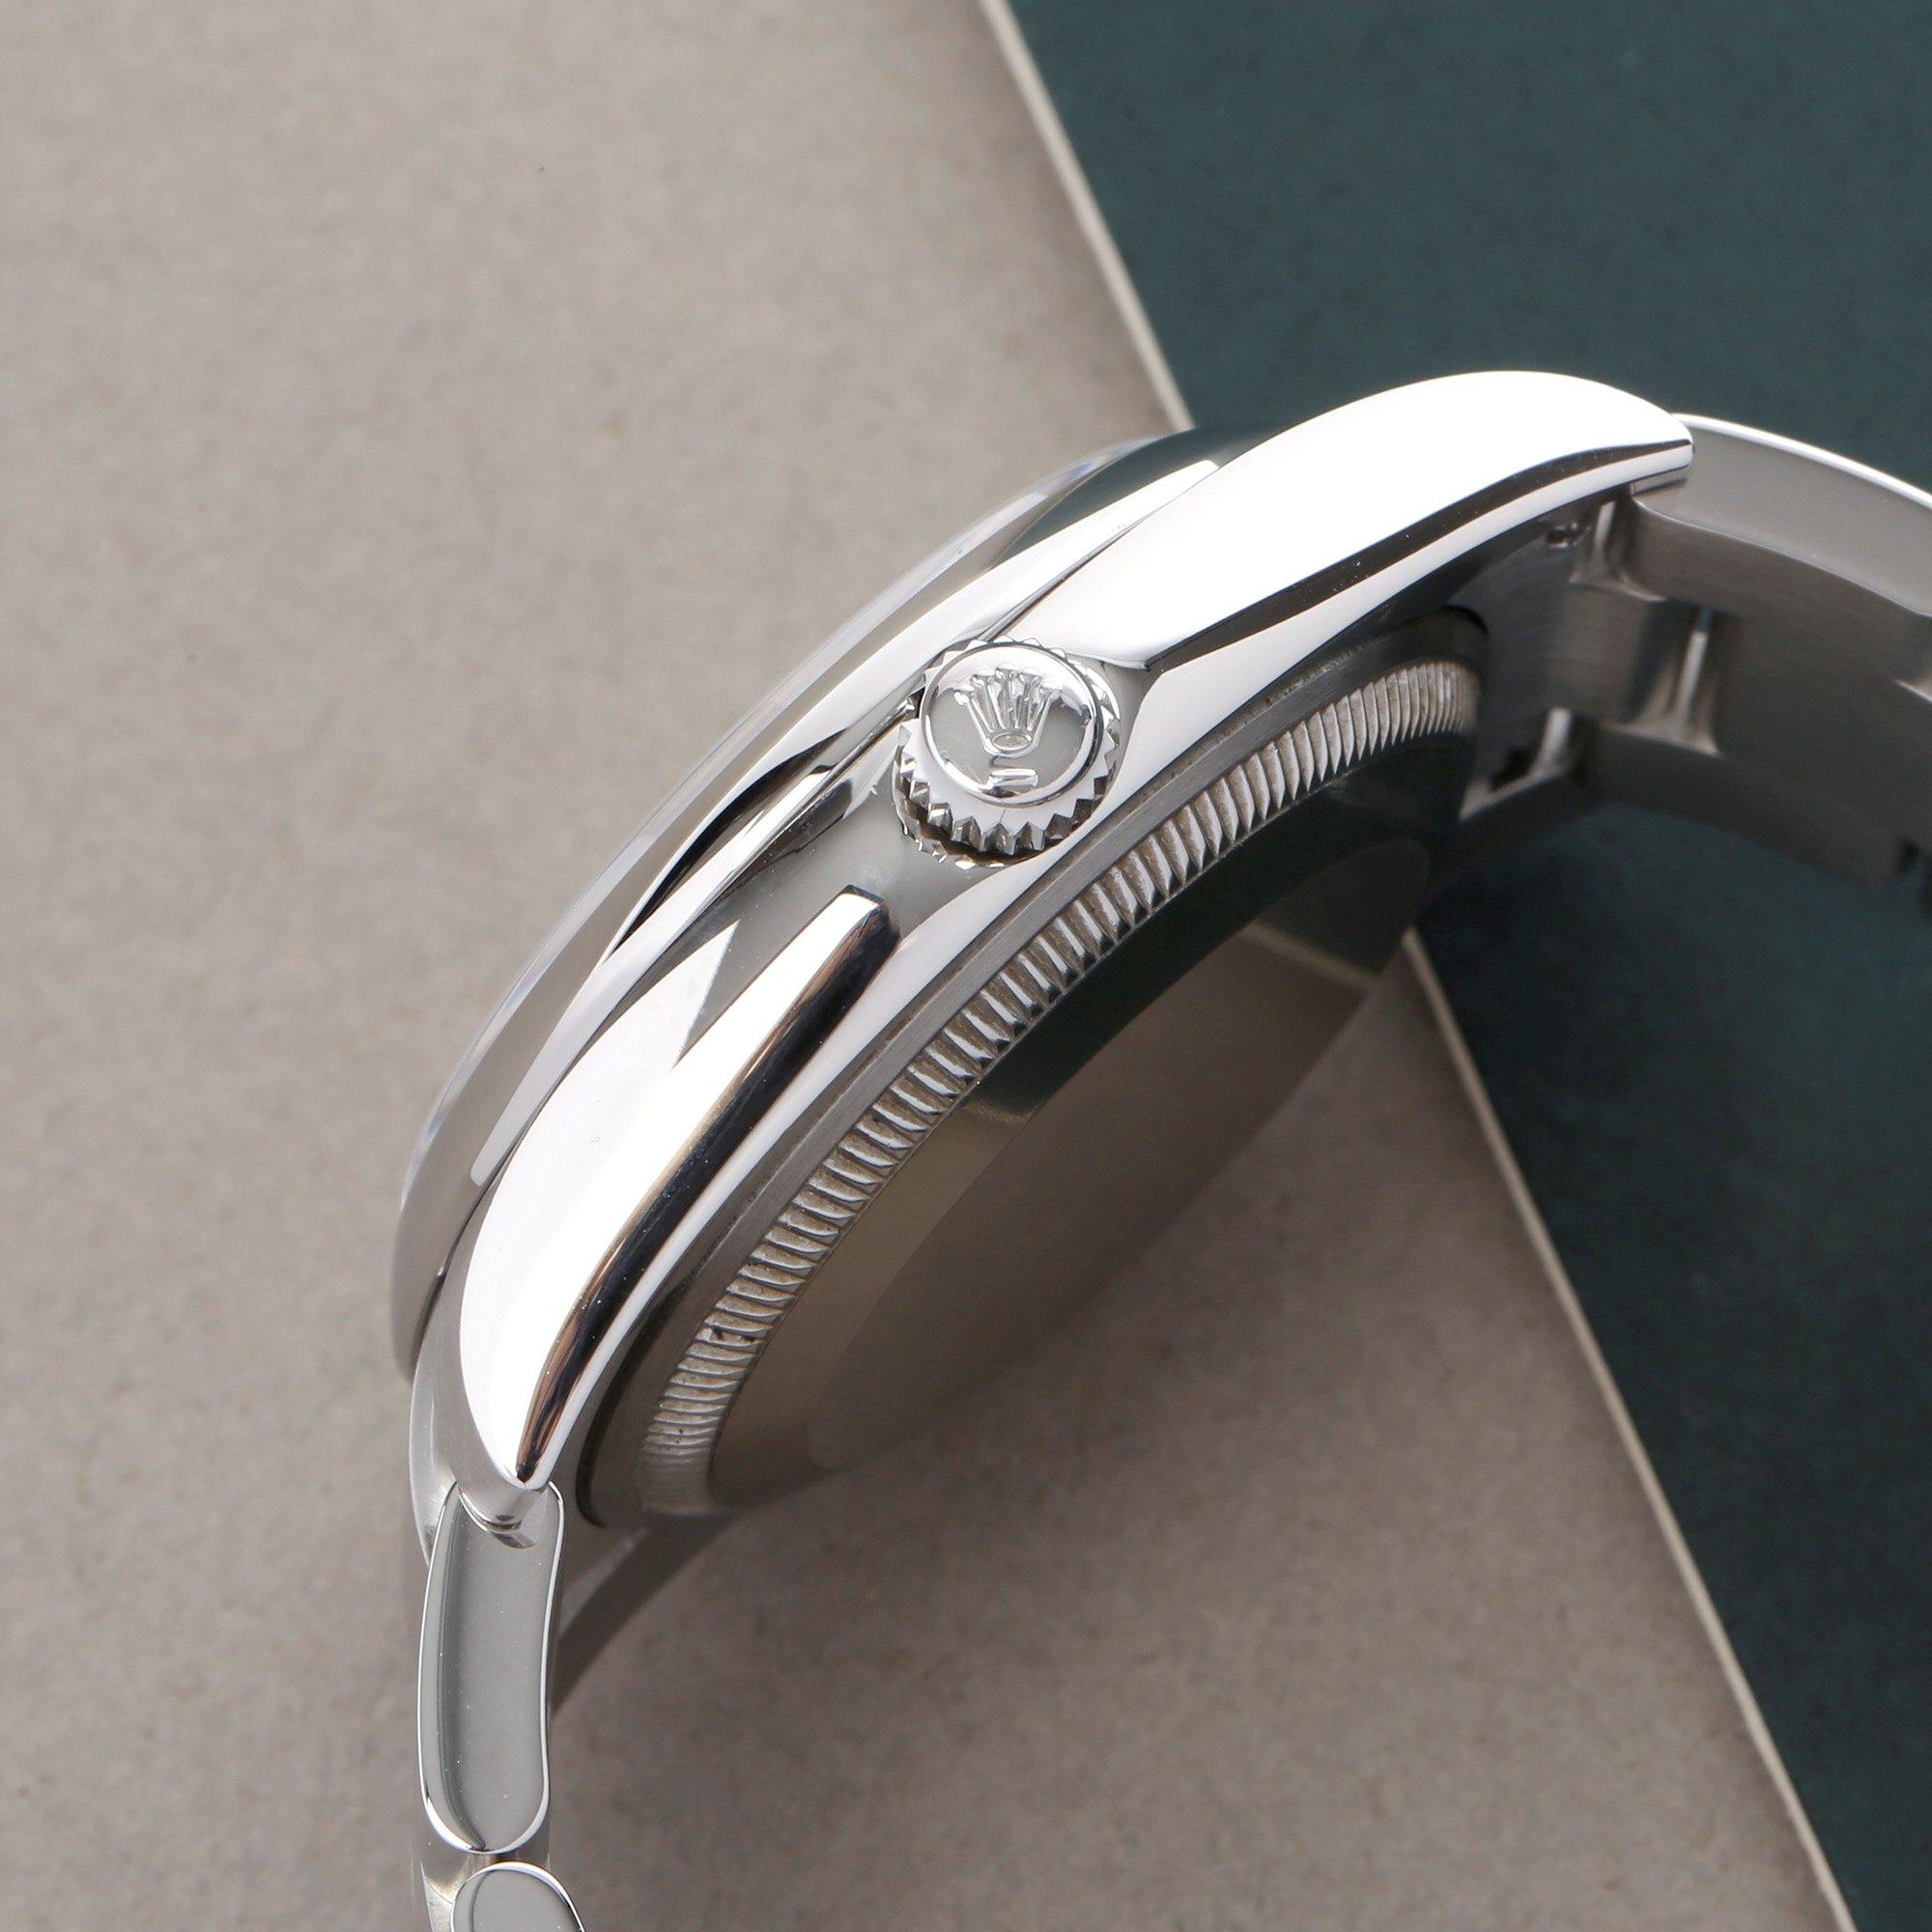 Rolex Air-King 114200 Unisex Stainless Steel Watch 1